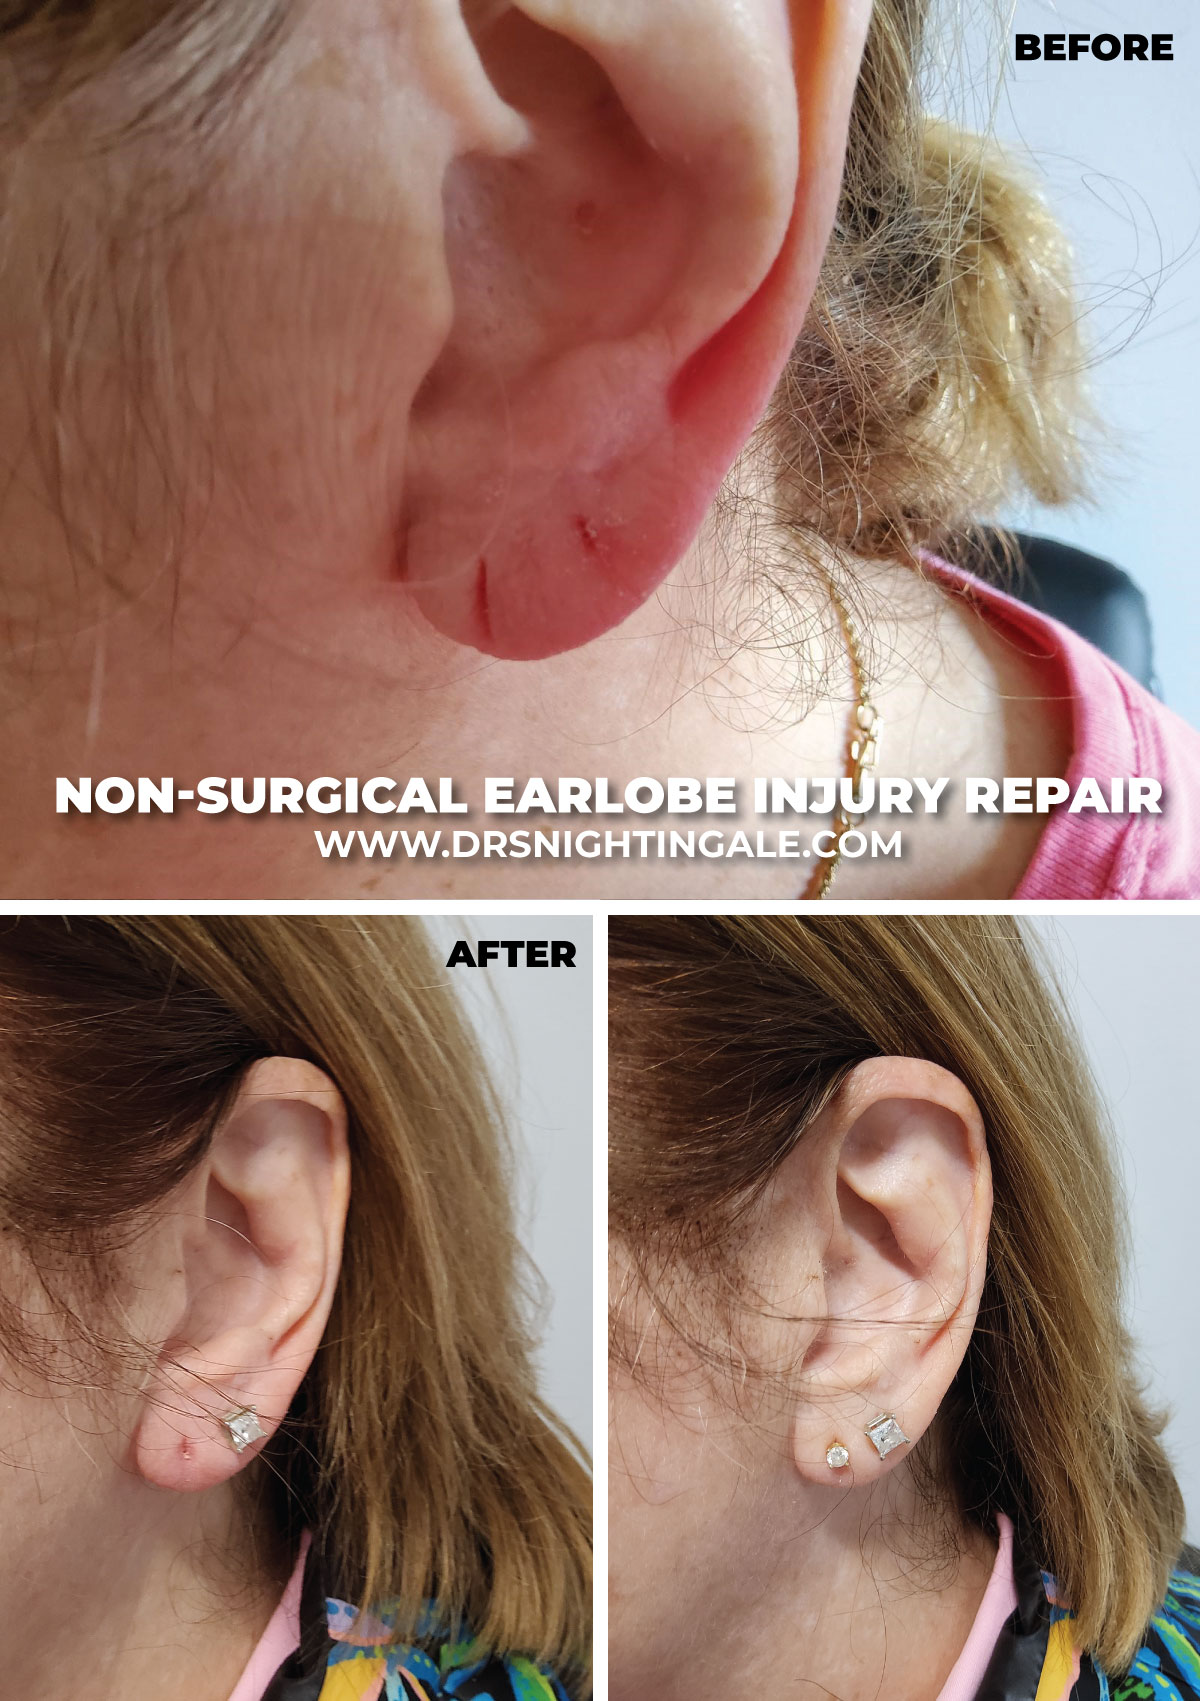 Non-surgical earlobe injury repair with Fotona Dynamis laser